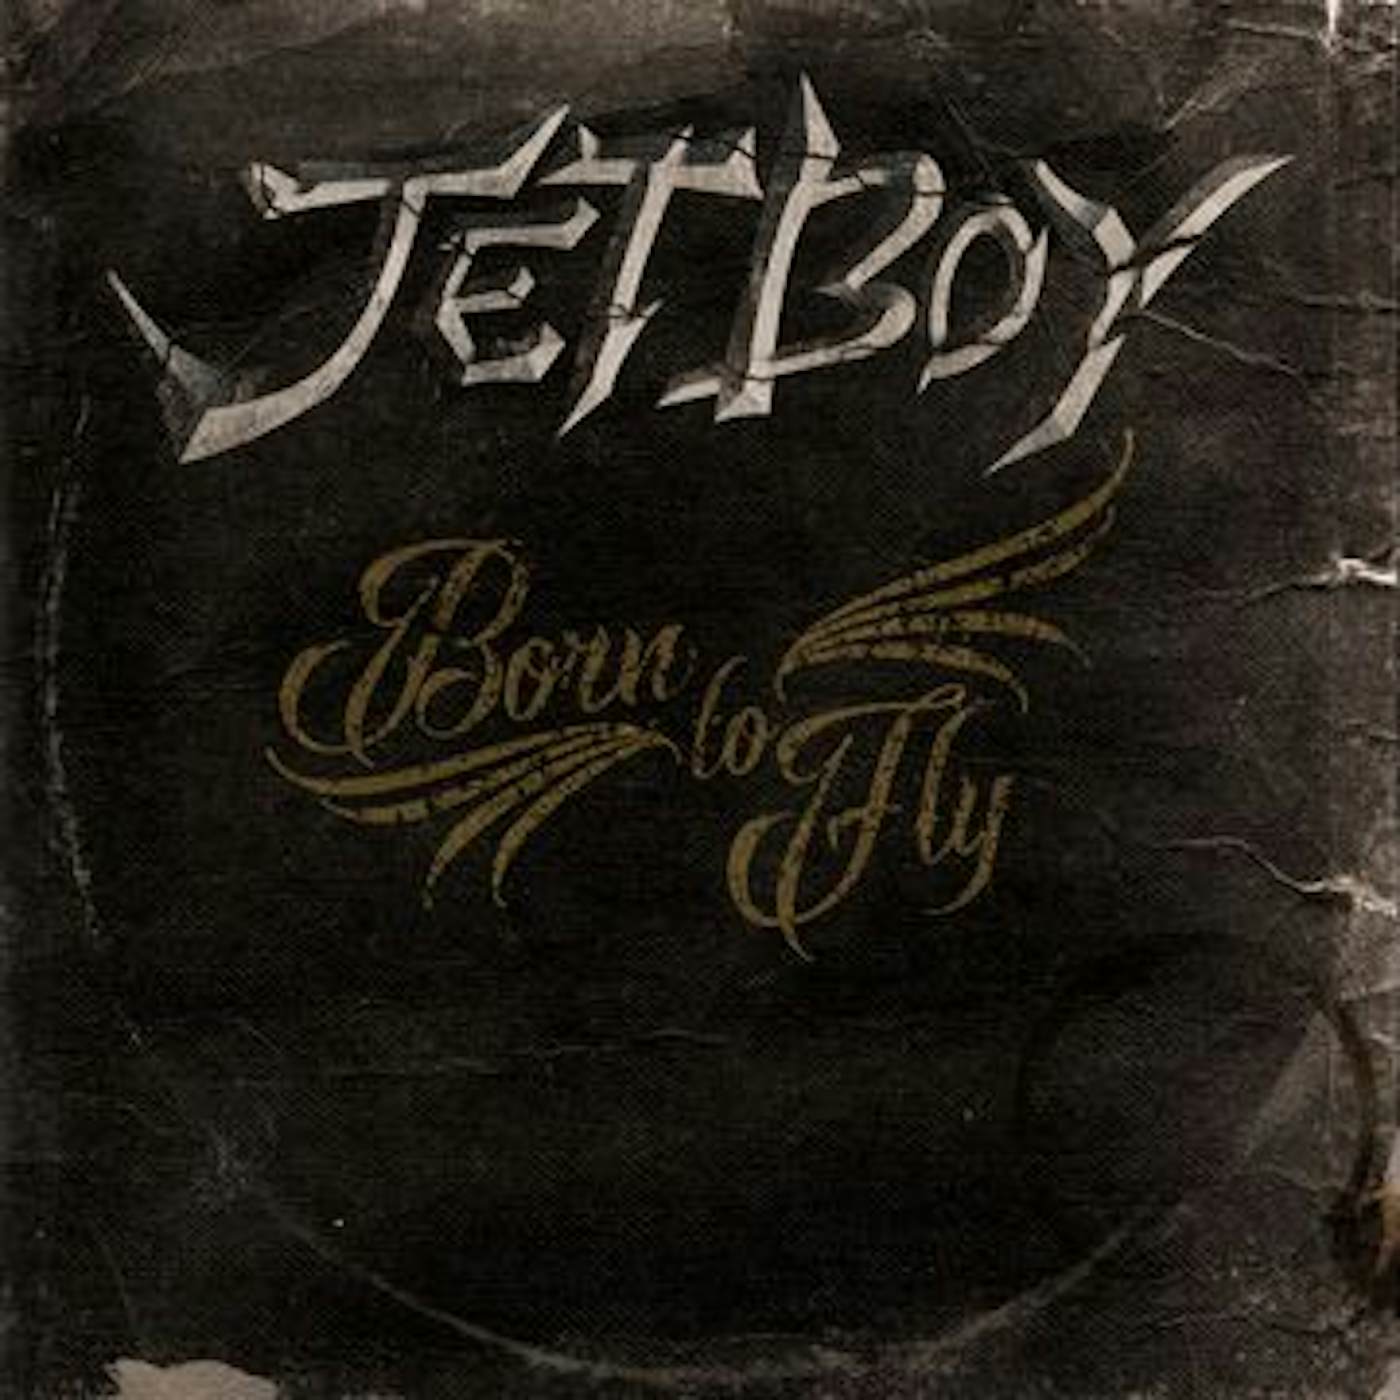 Jetboy Born To Fly Vinyl Record